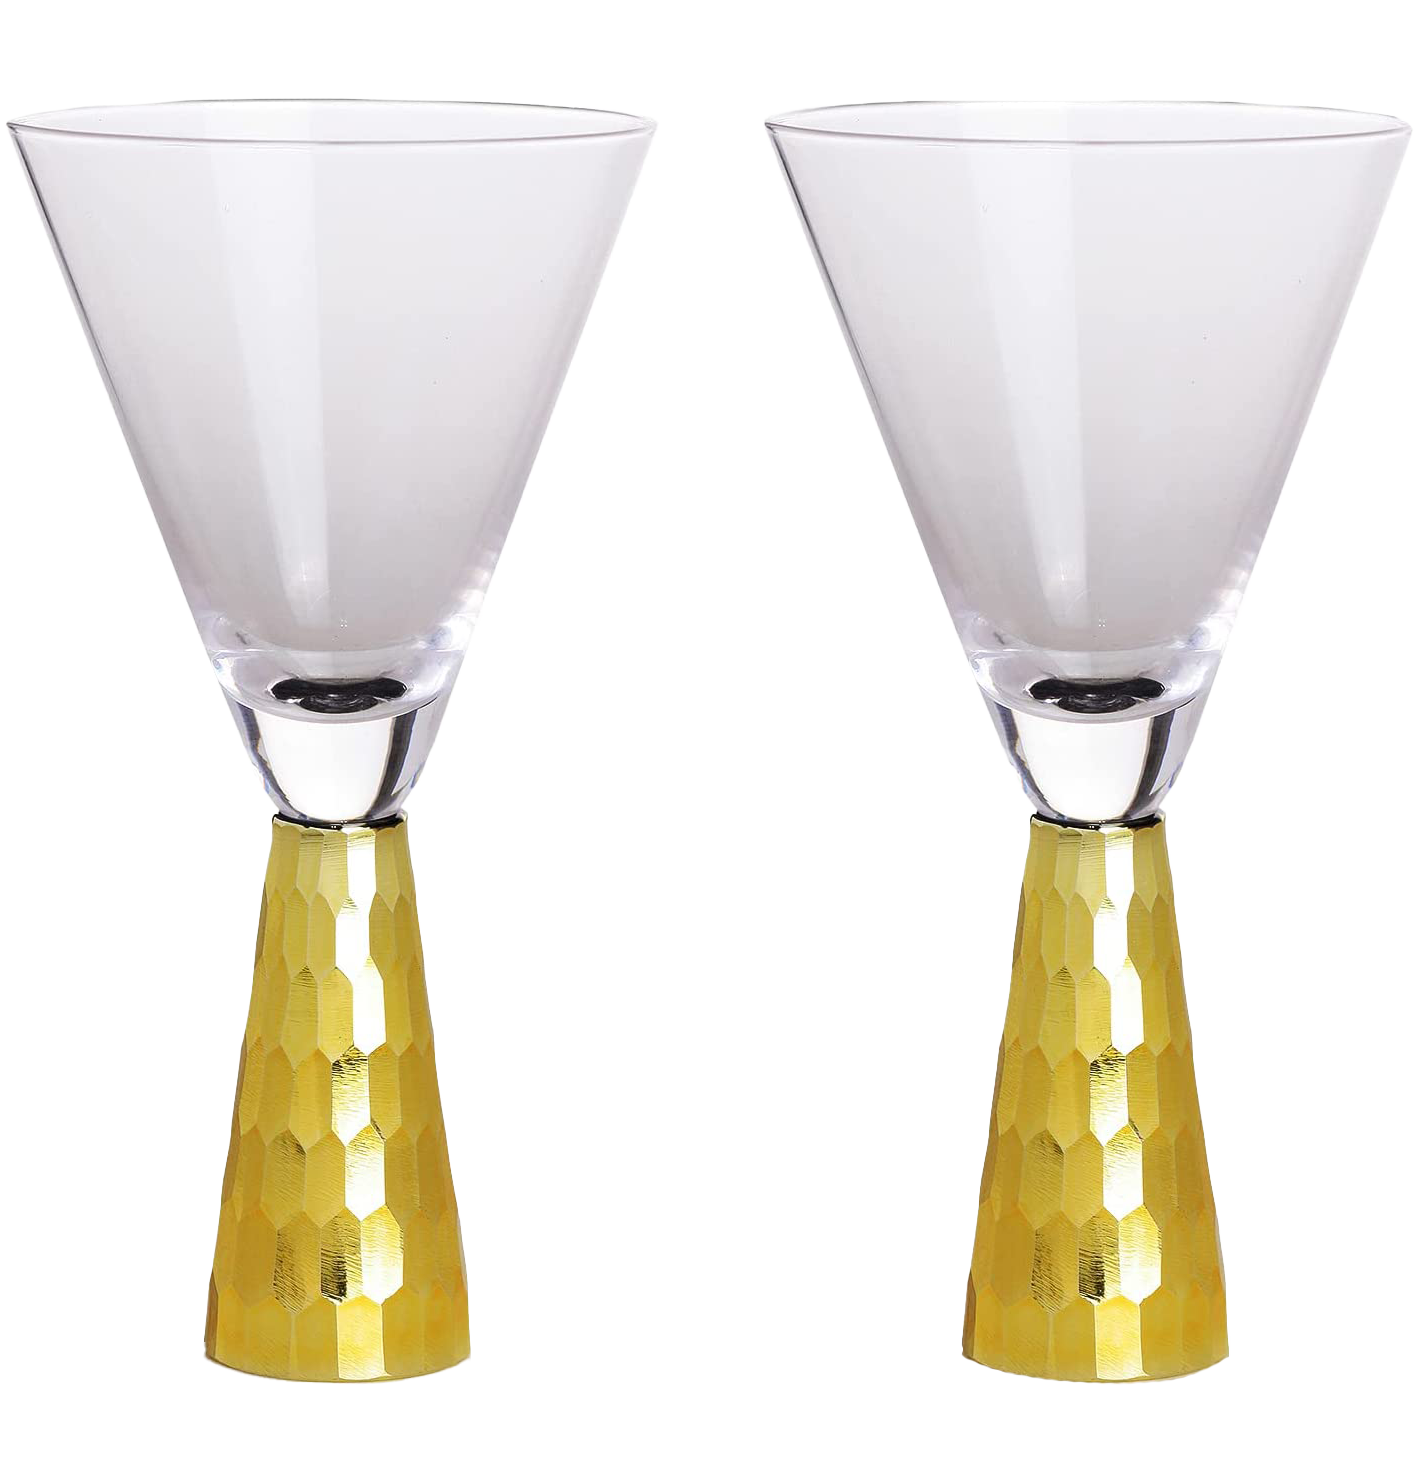 Diamond Studded Martini Glasses Set of 2 - The Wine Savant - Silver Ri